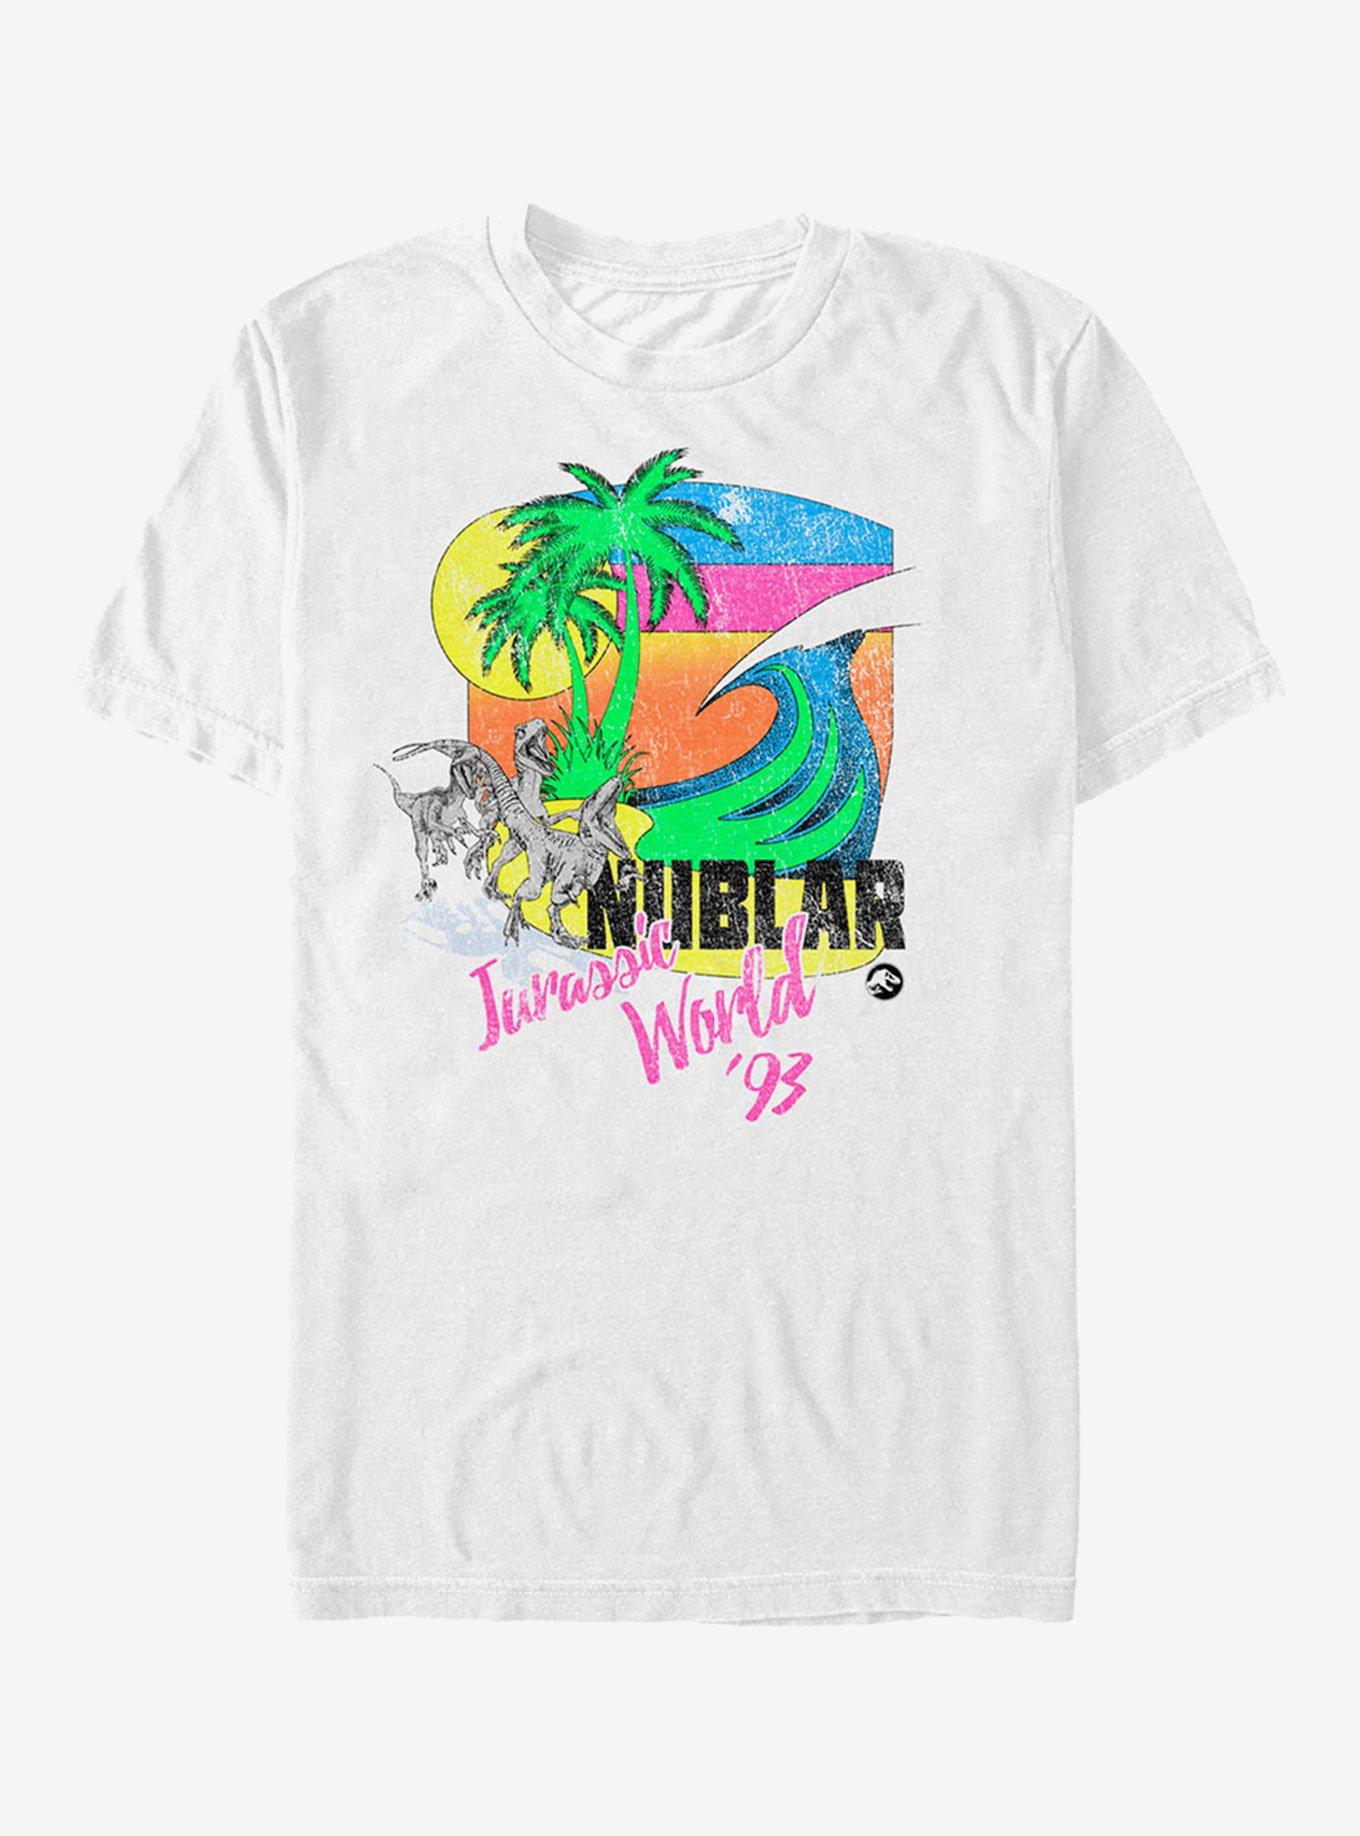 Retro '93 Surf Nublar T-Shirt, WHITE, hi-res